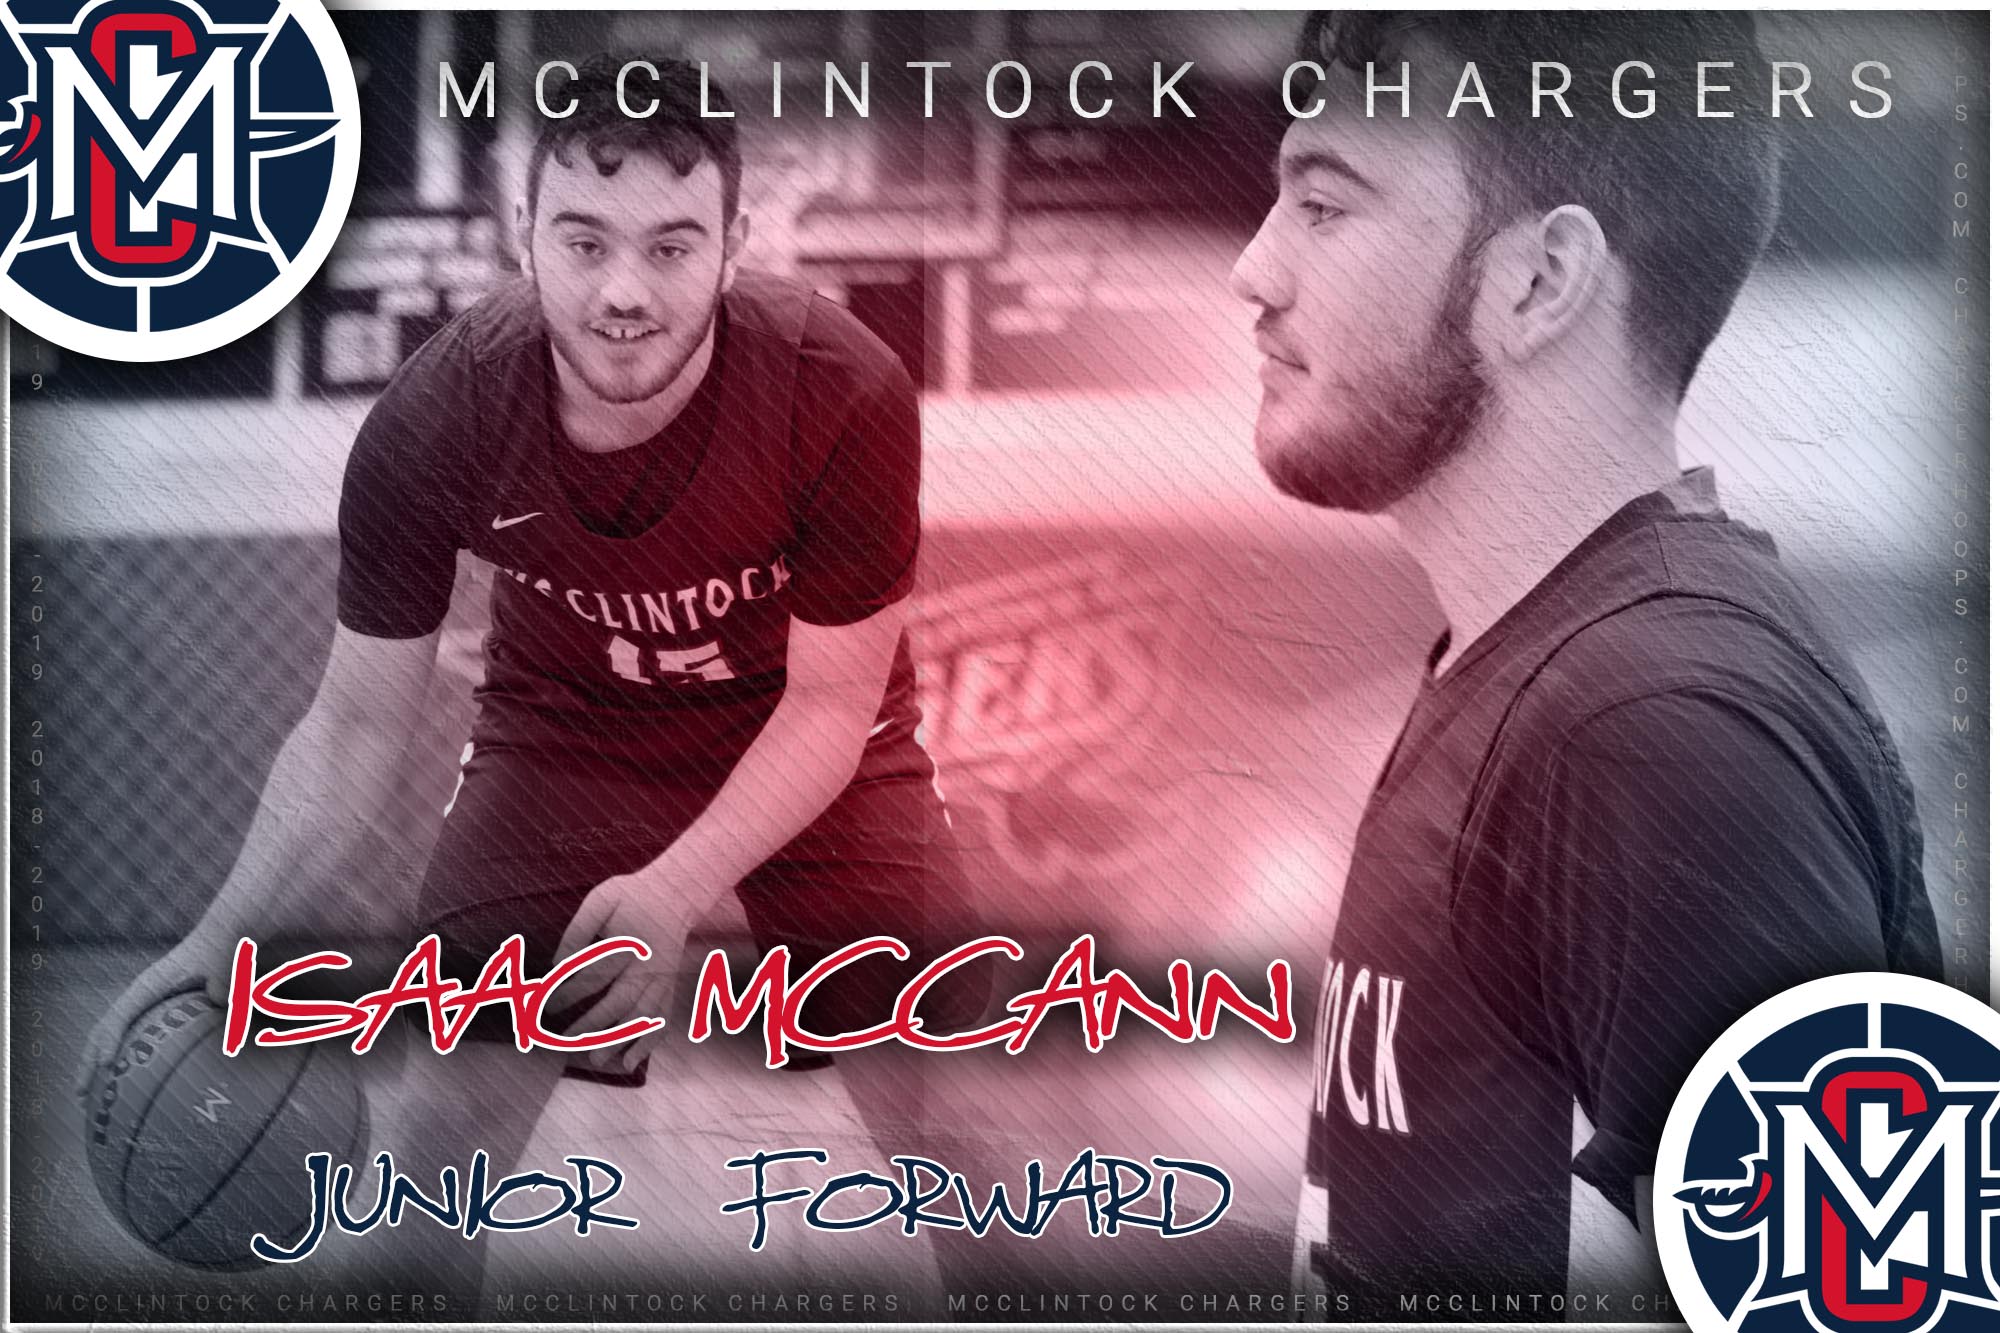 McClintock Chargers Basketball- Isaac McCann